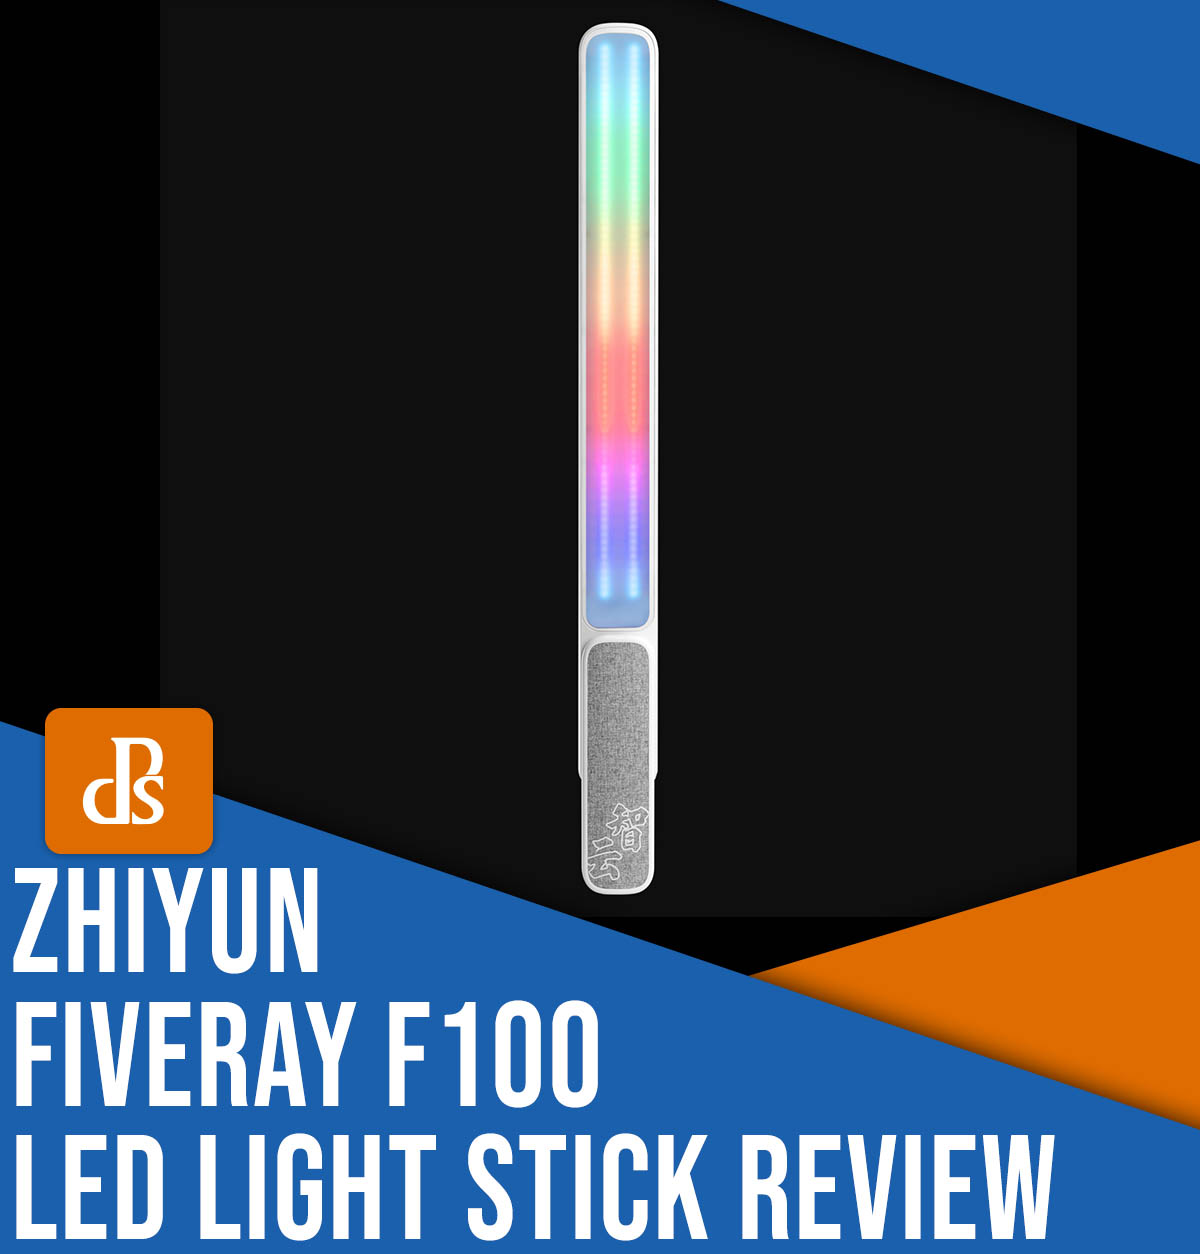 Zhiyun Fiveray F100 LED Light Stick review